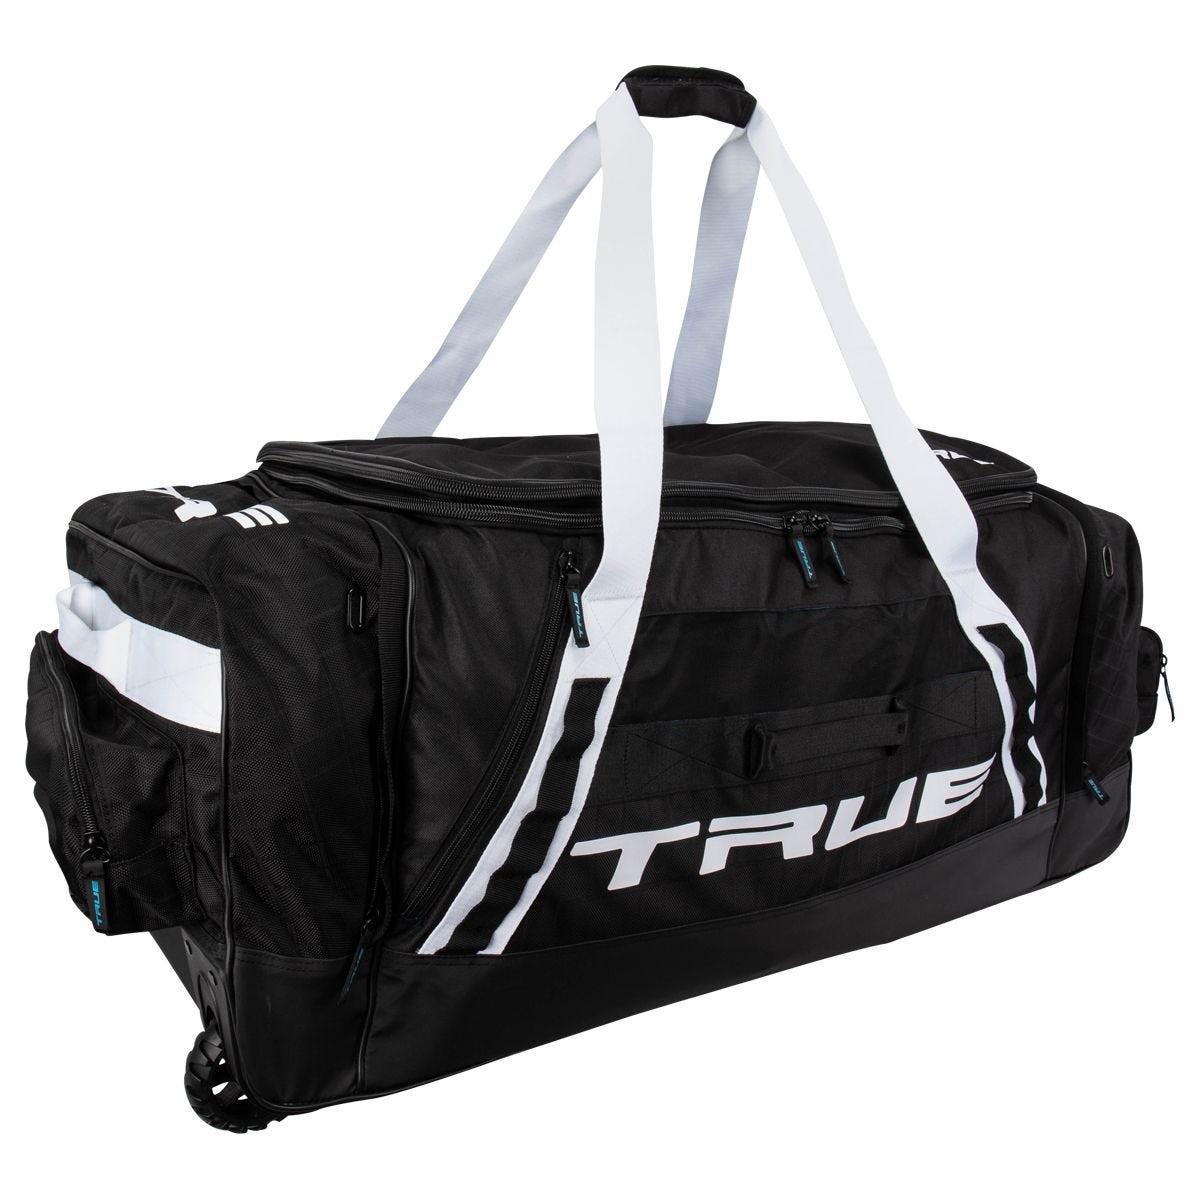 TRUE Elite Wheeled Equipment Bag